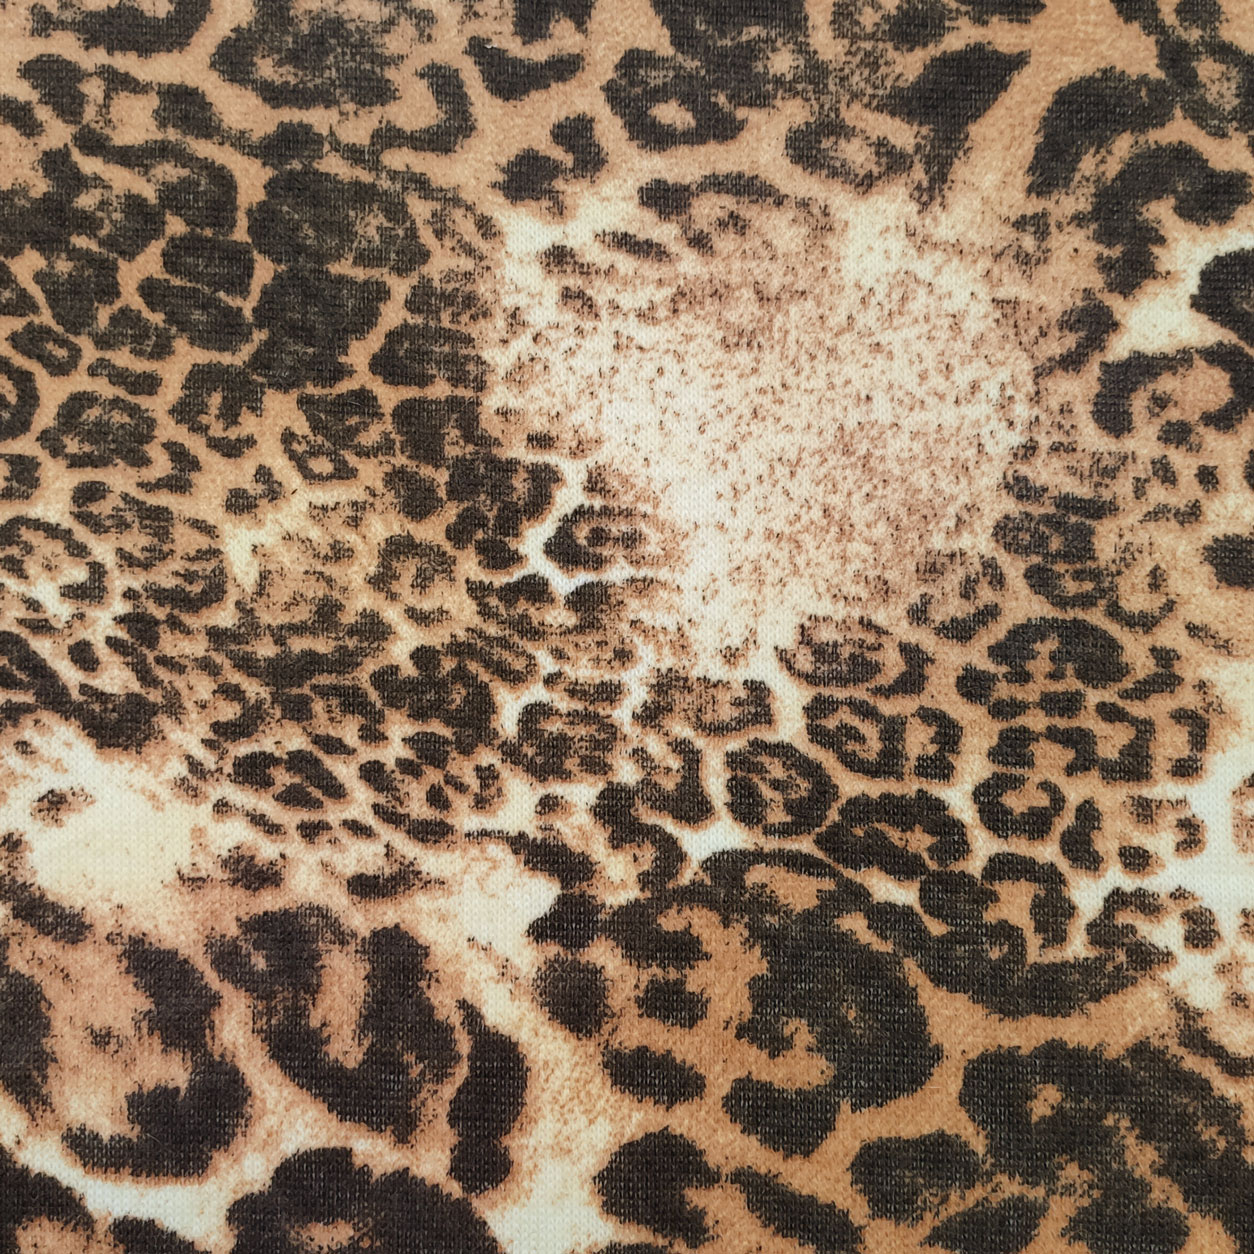 tessuto-maglina-leopardata-beige-nero